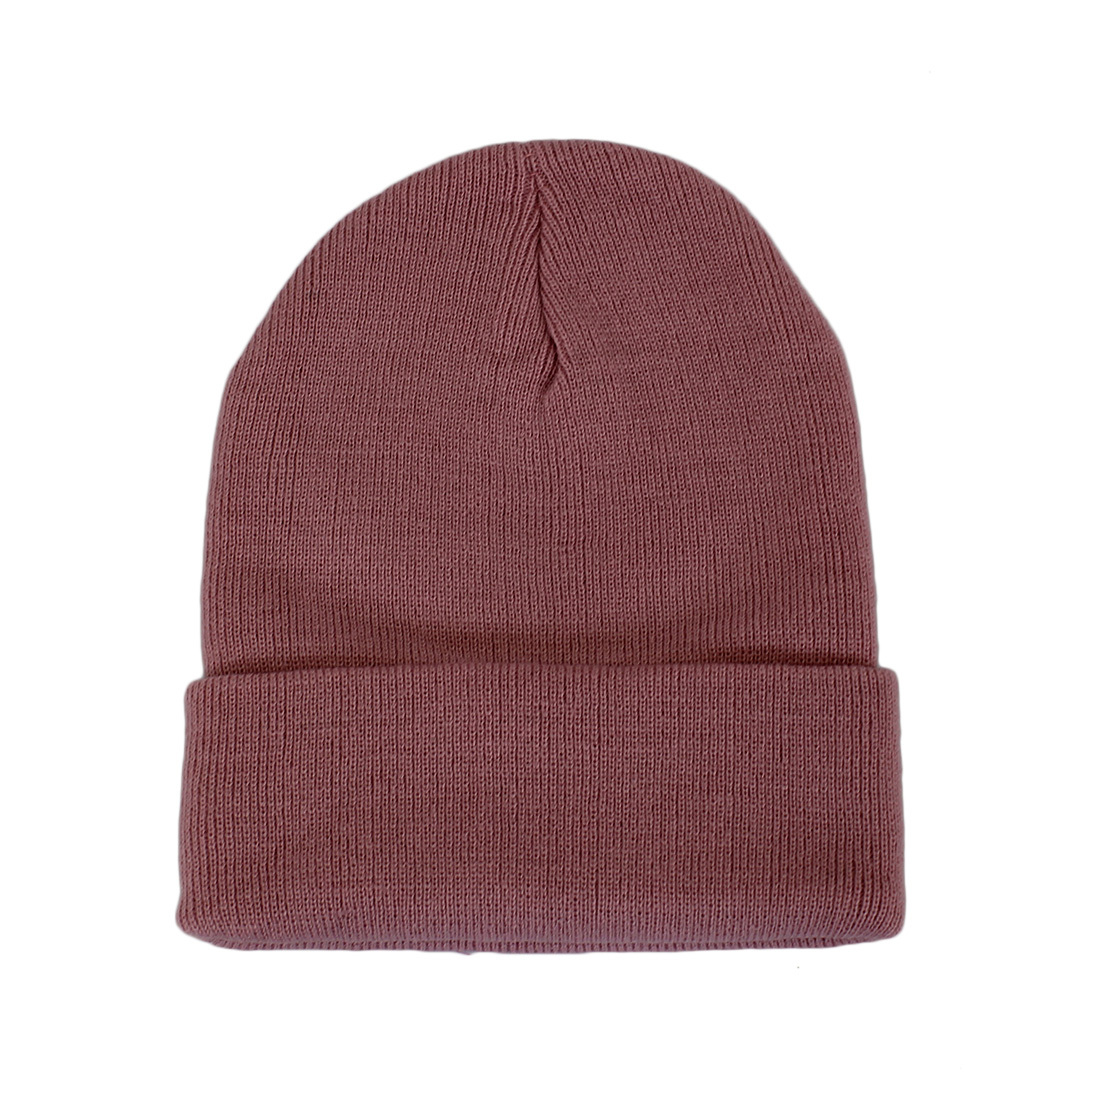  Plain knitted winter cap